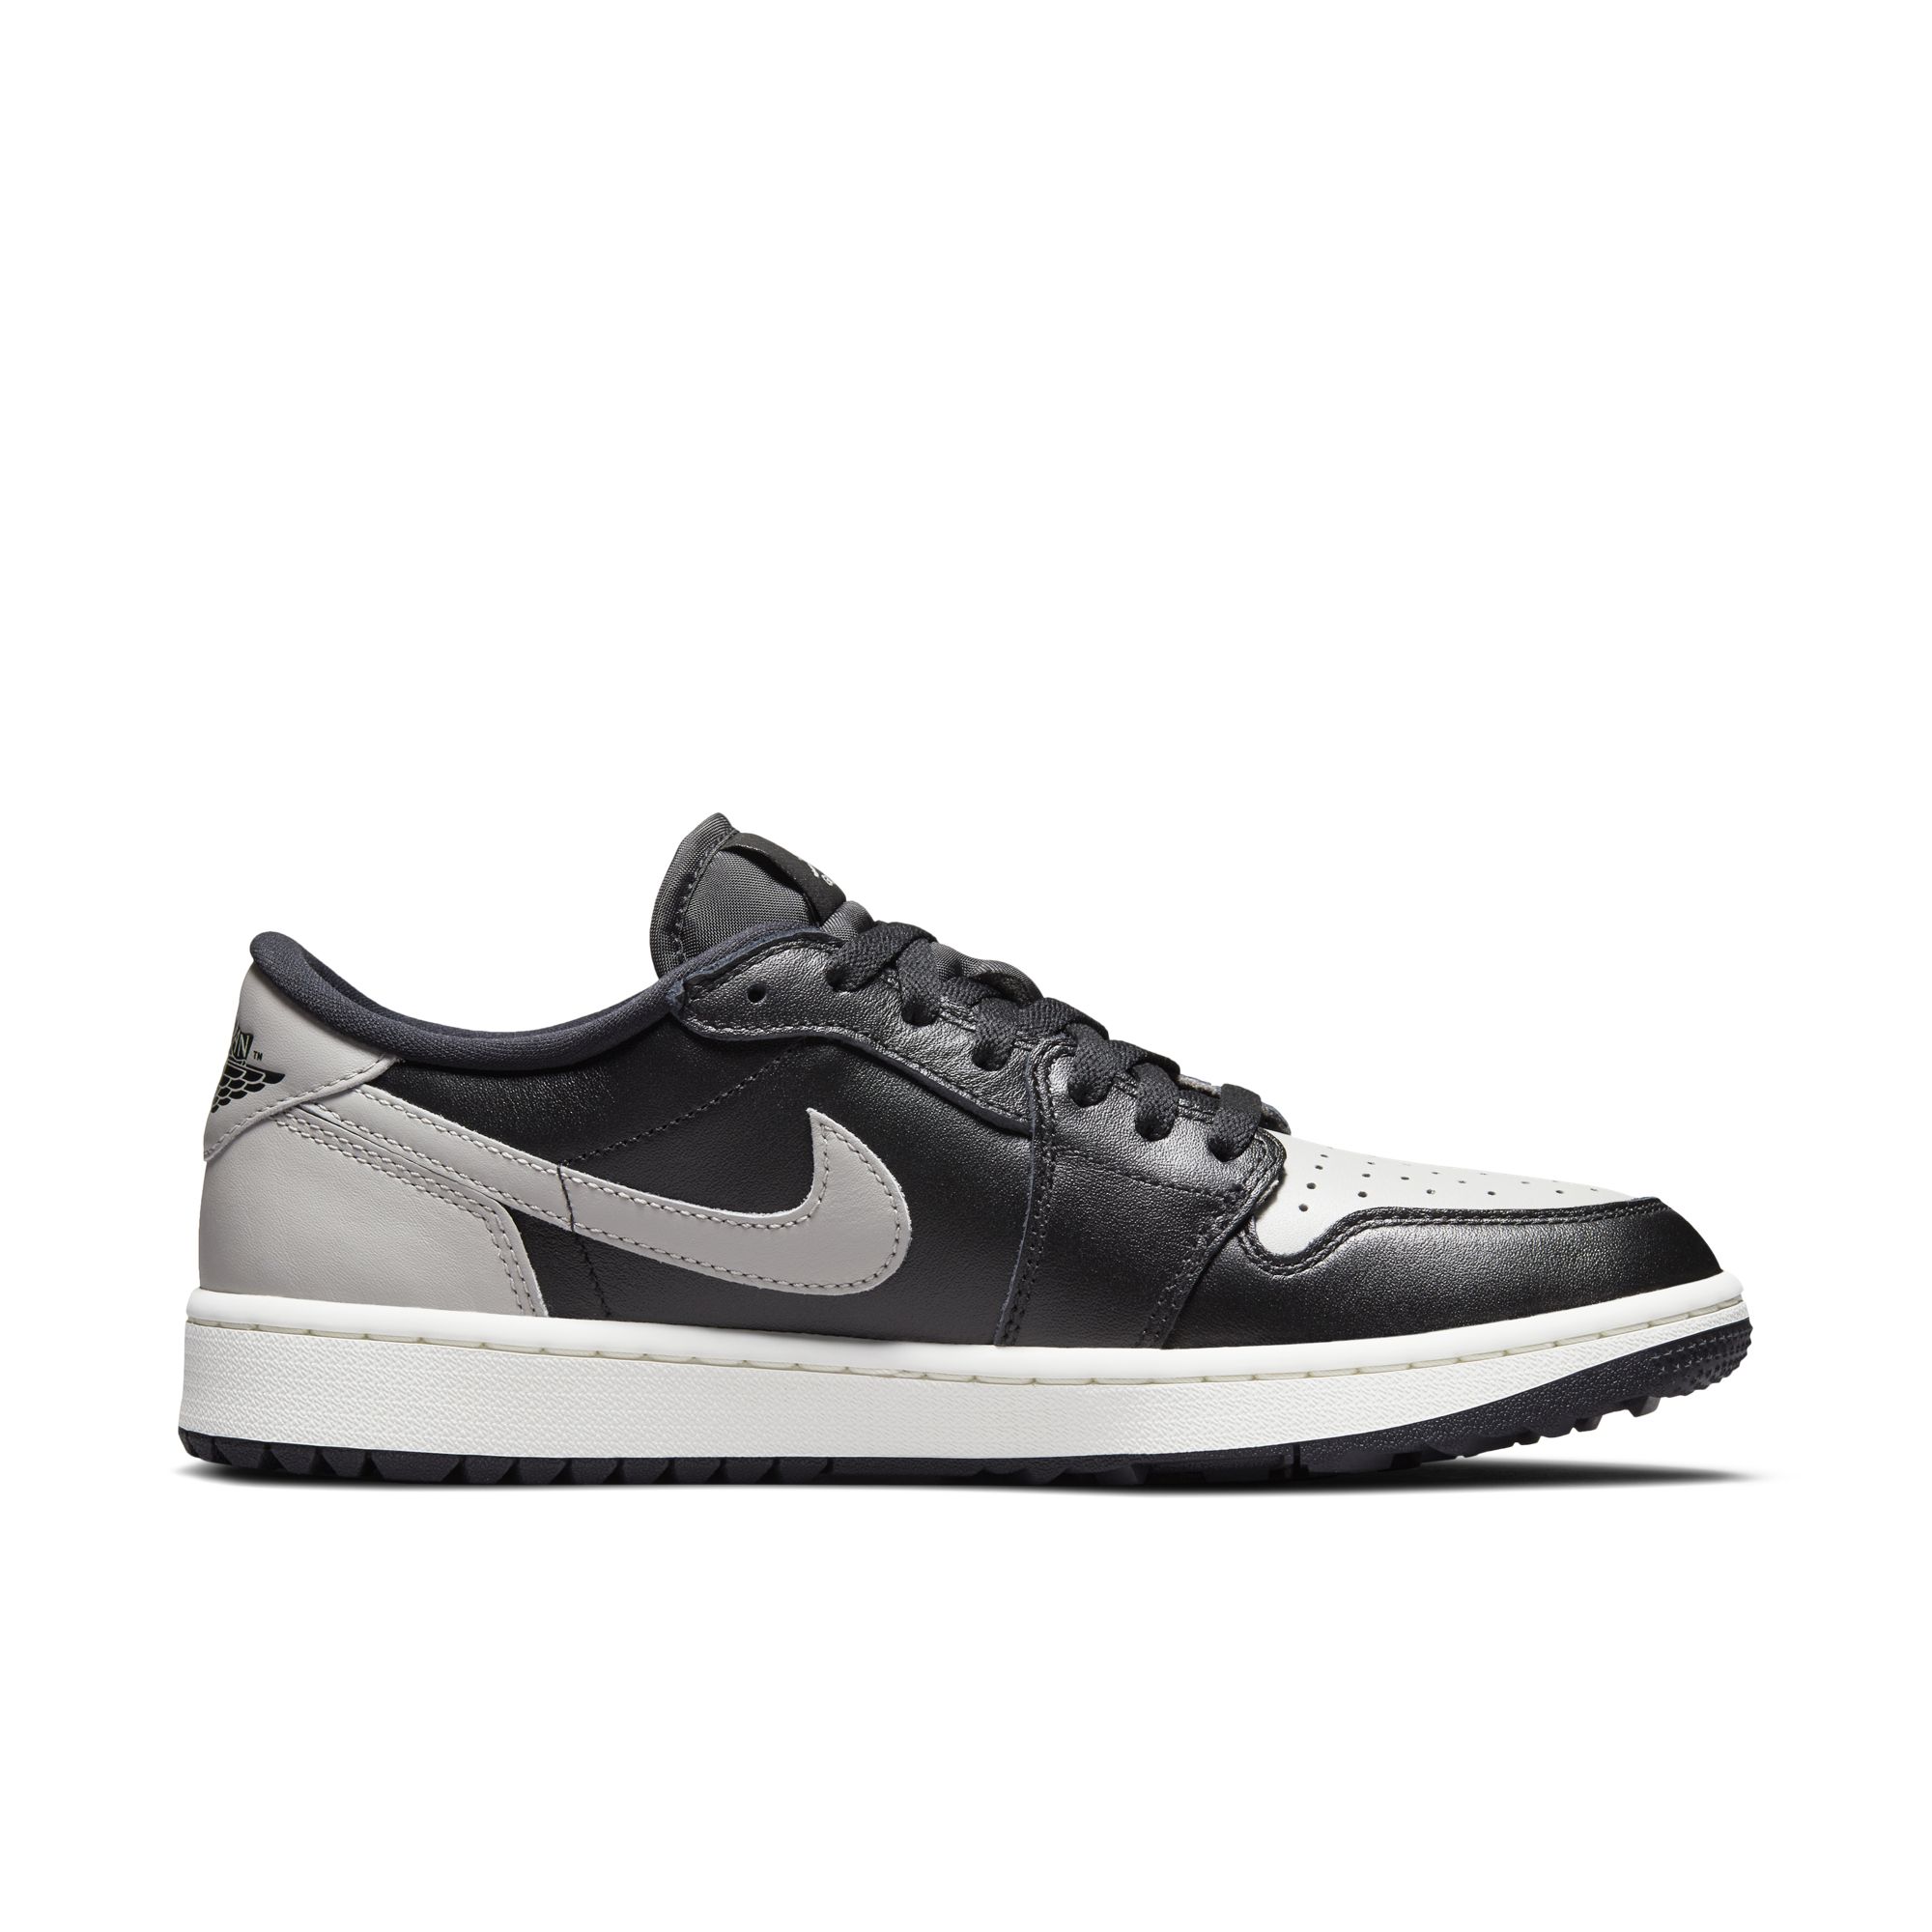 DD9315-001 | Nike Air Jordan | Black |